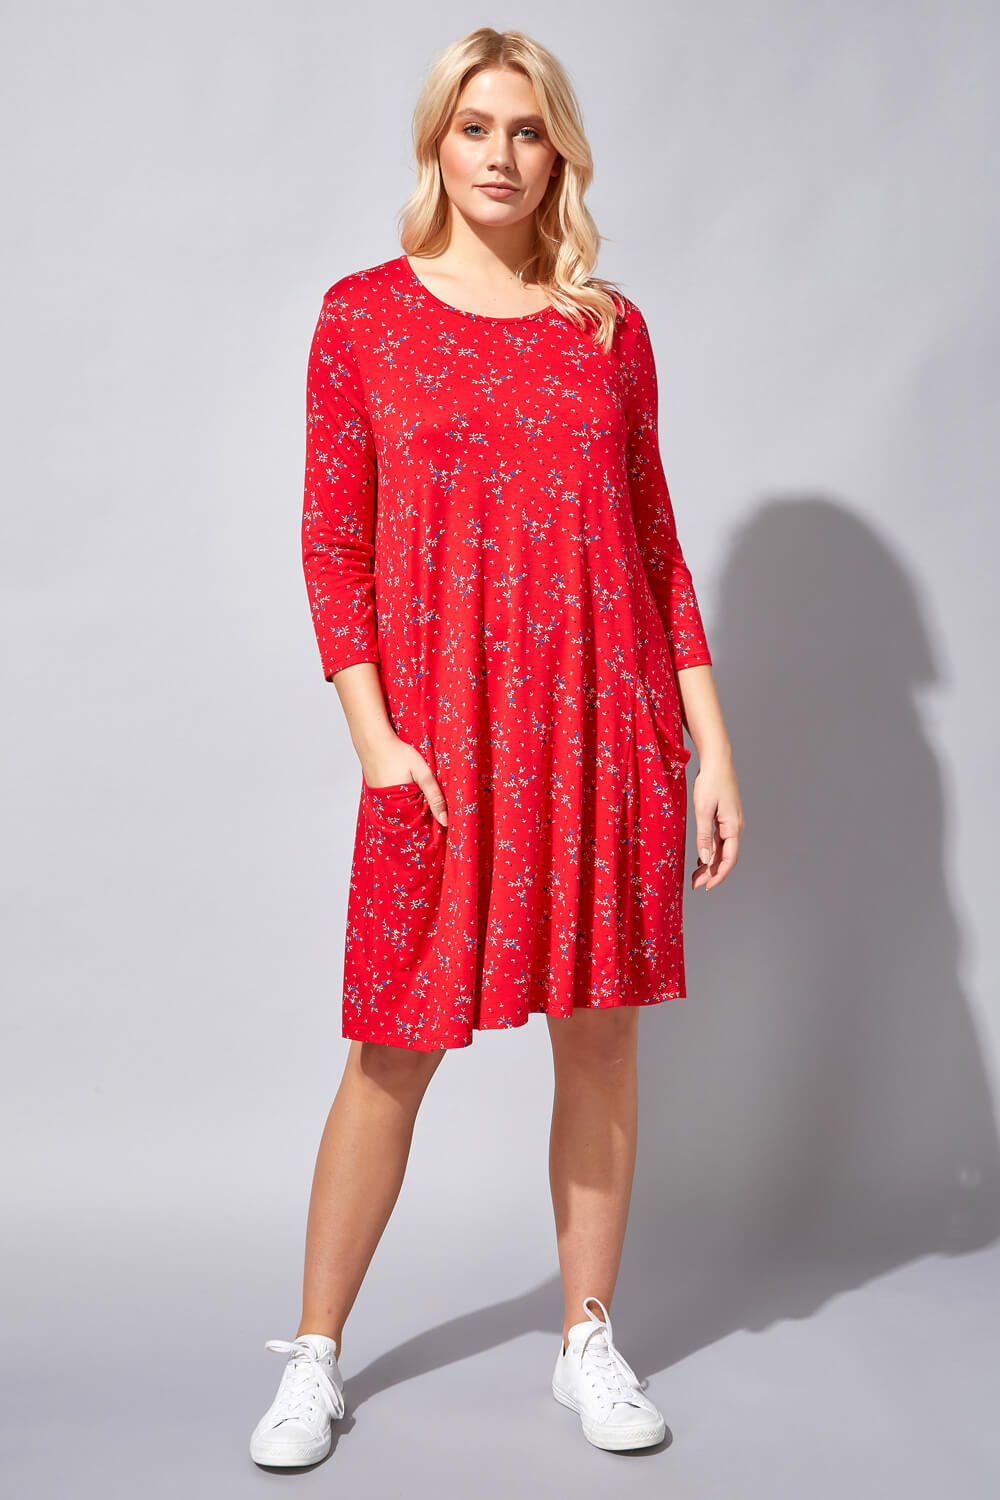 Floral Pocket Swing Dress in Red - Roman Originals UK